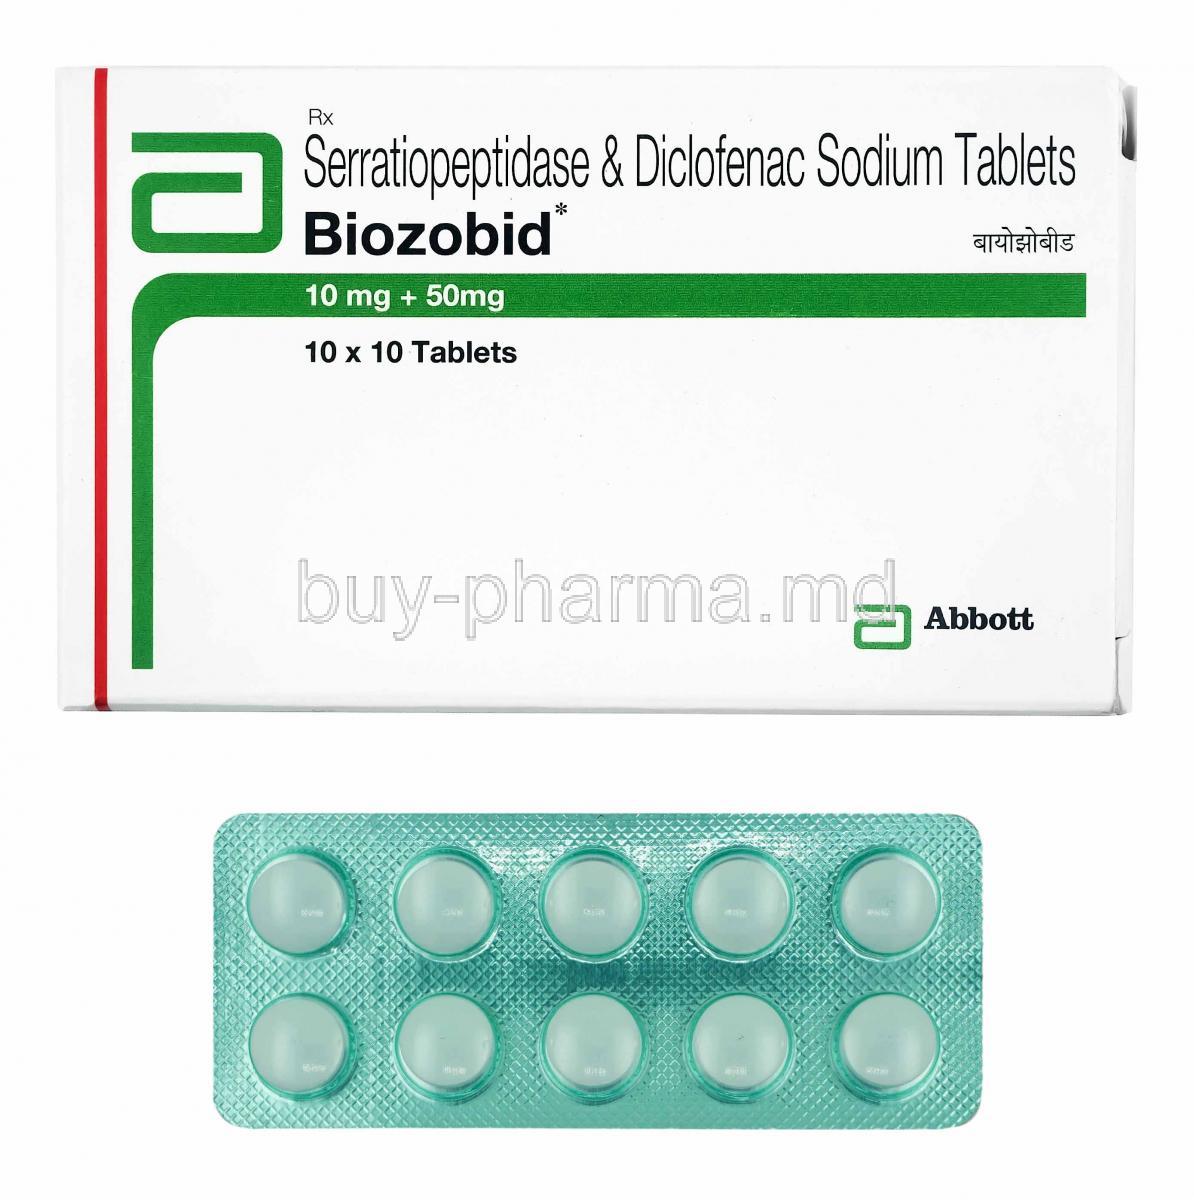 Biozobid, Diclofenac and Serratiopeptidase box and tablets